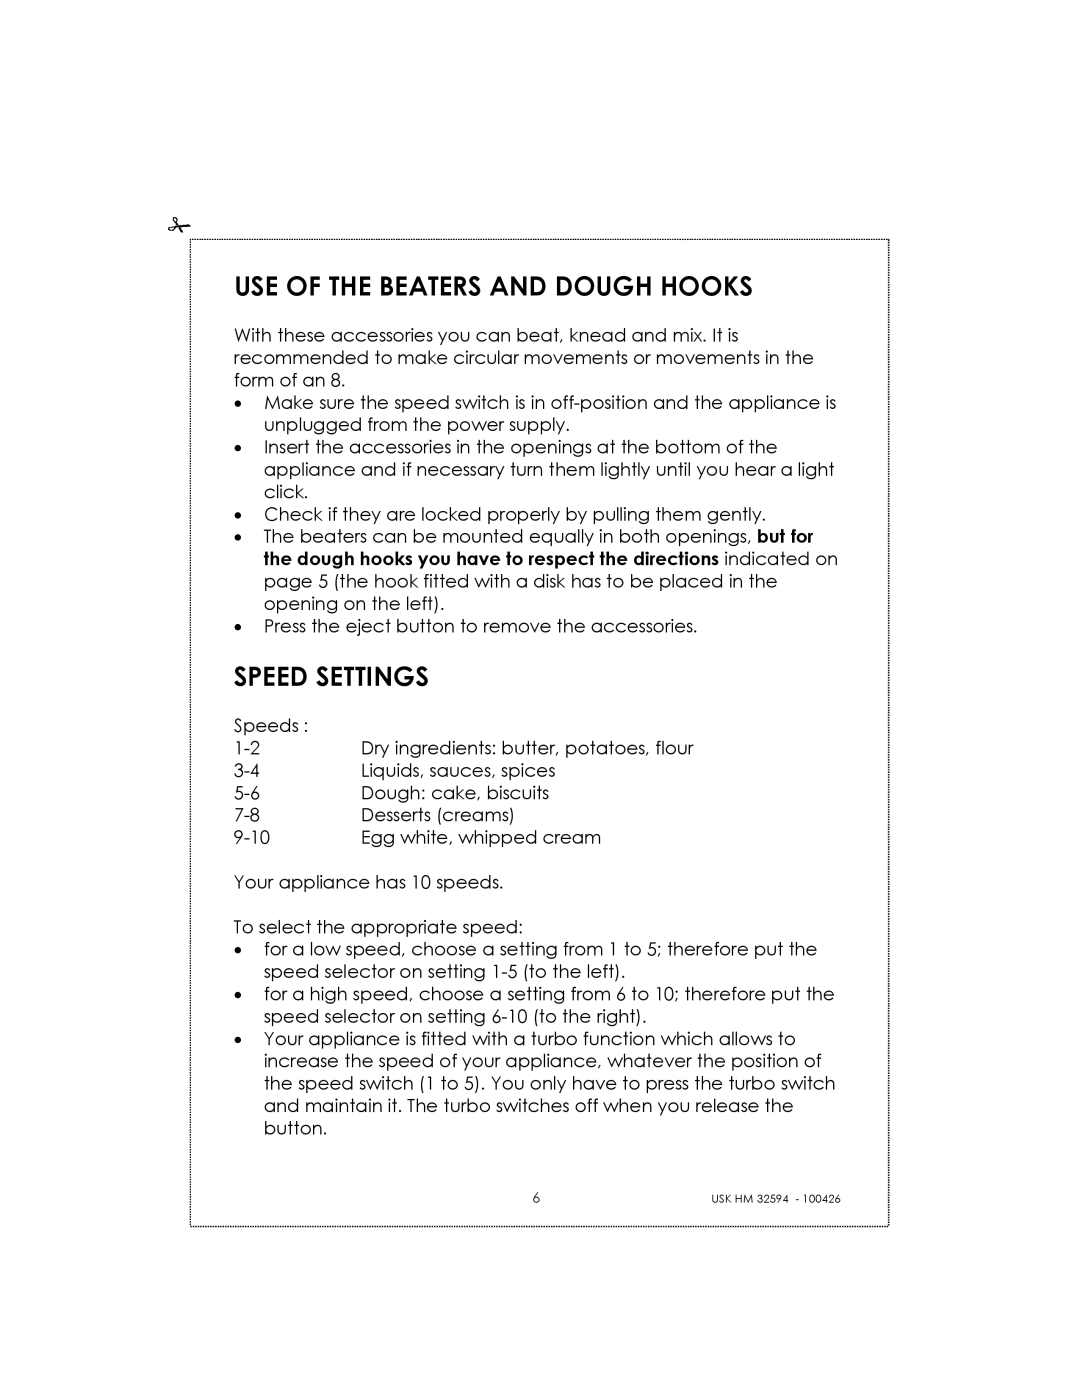 Kalorik USK HM 32594 manual Use Of The Beaters And Dough Hooks, Speed Settings 